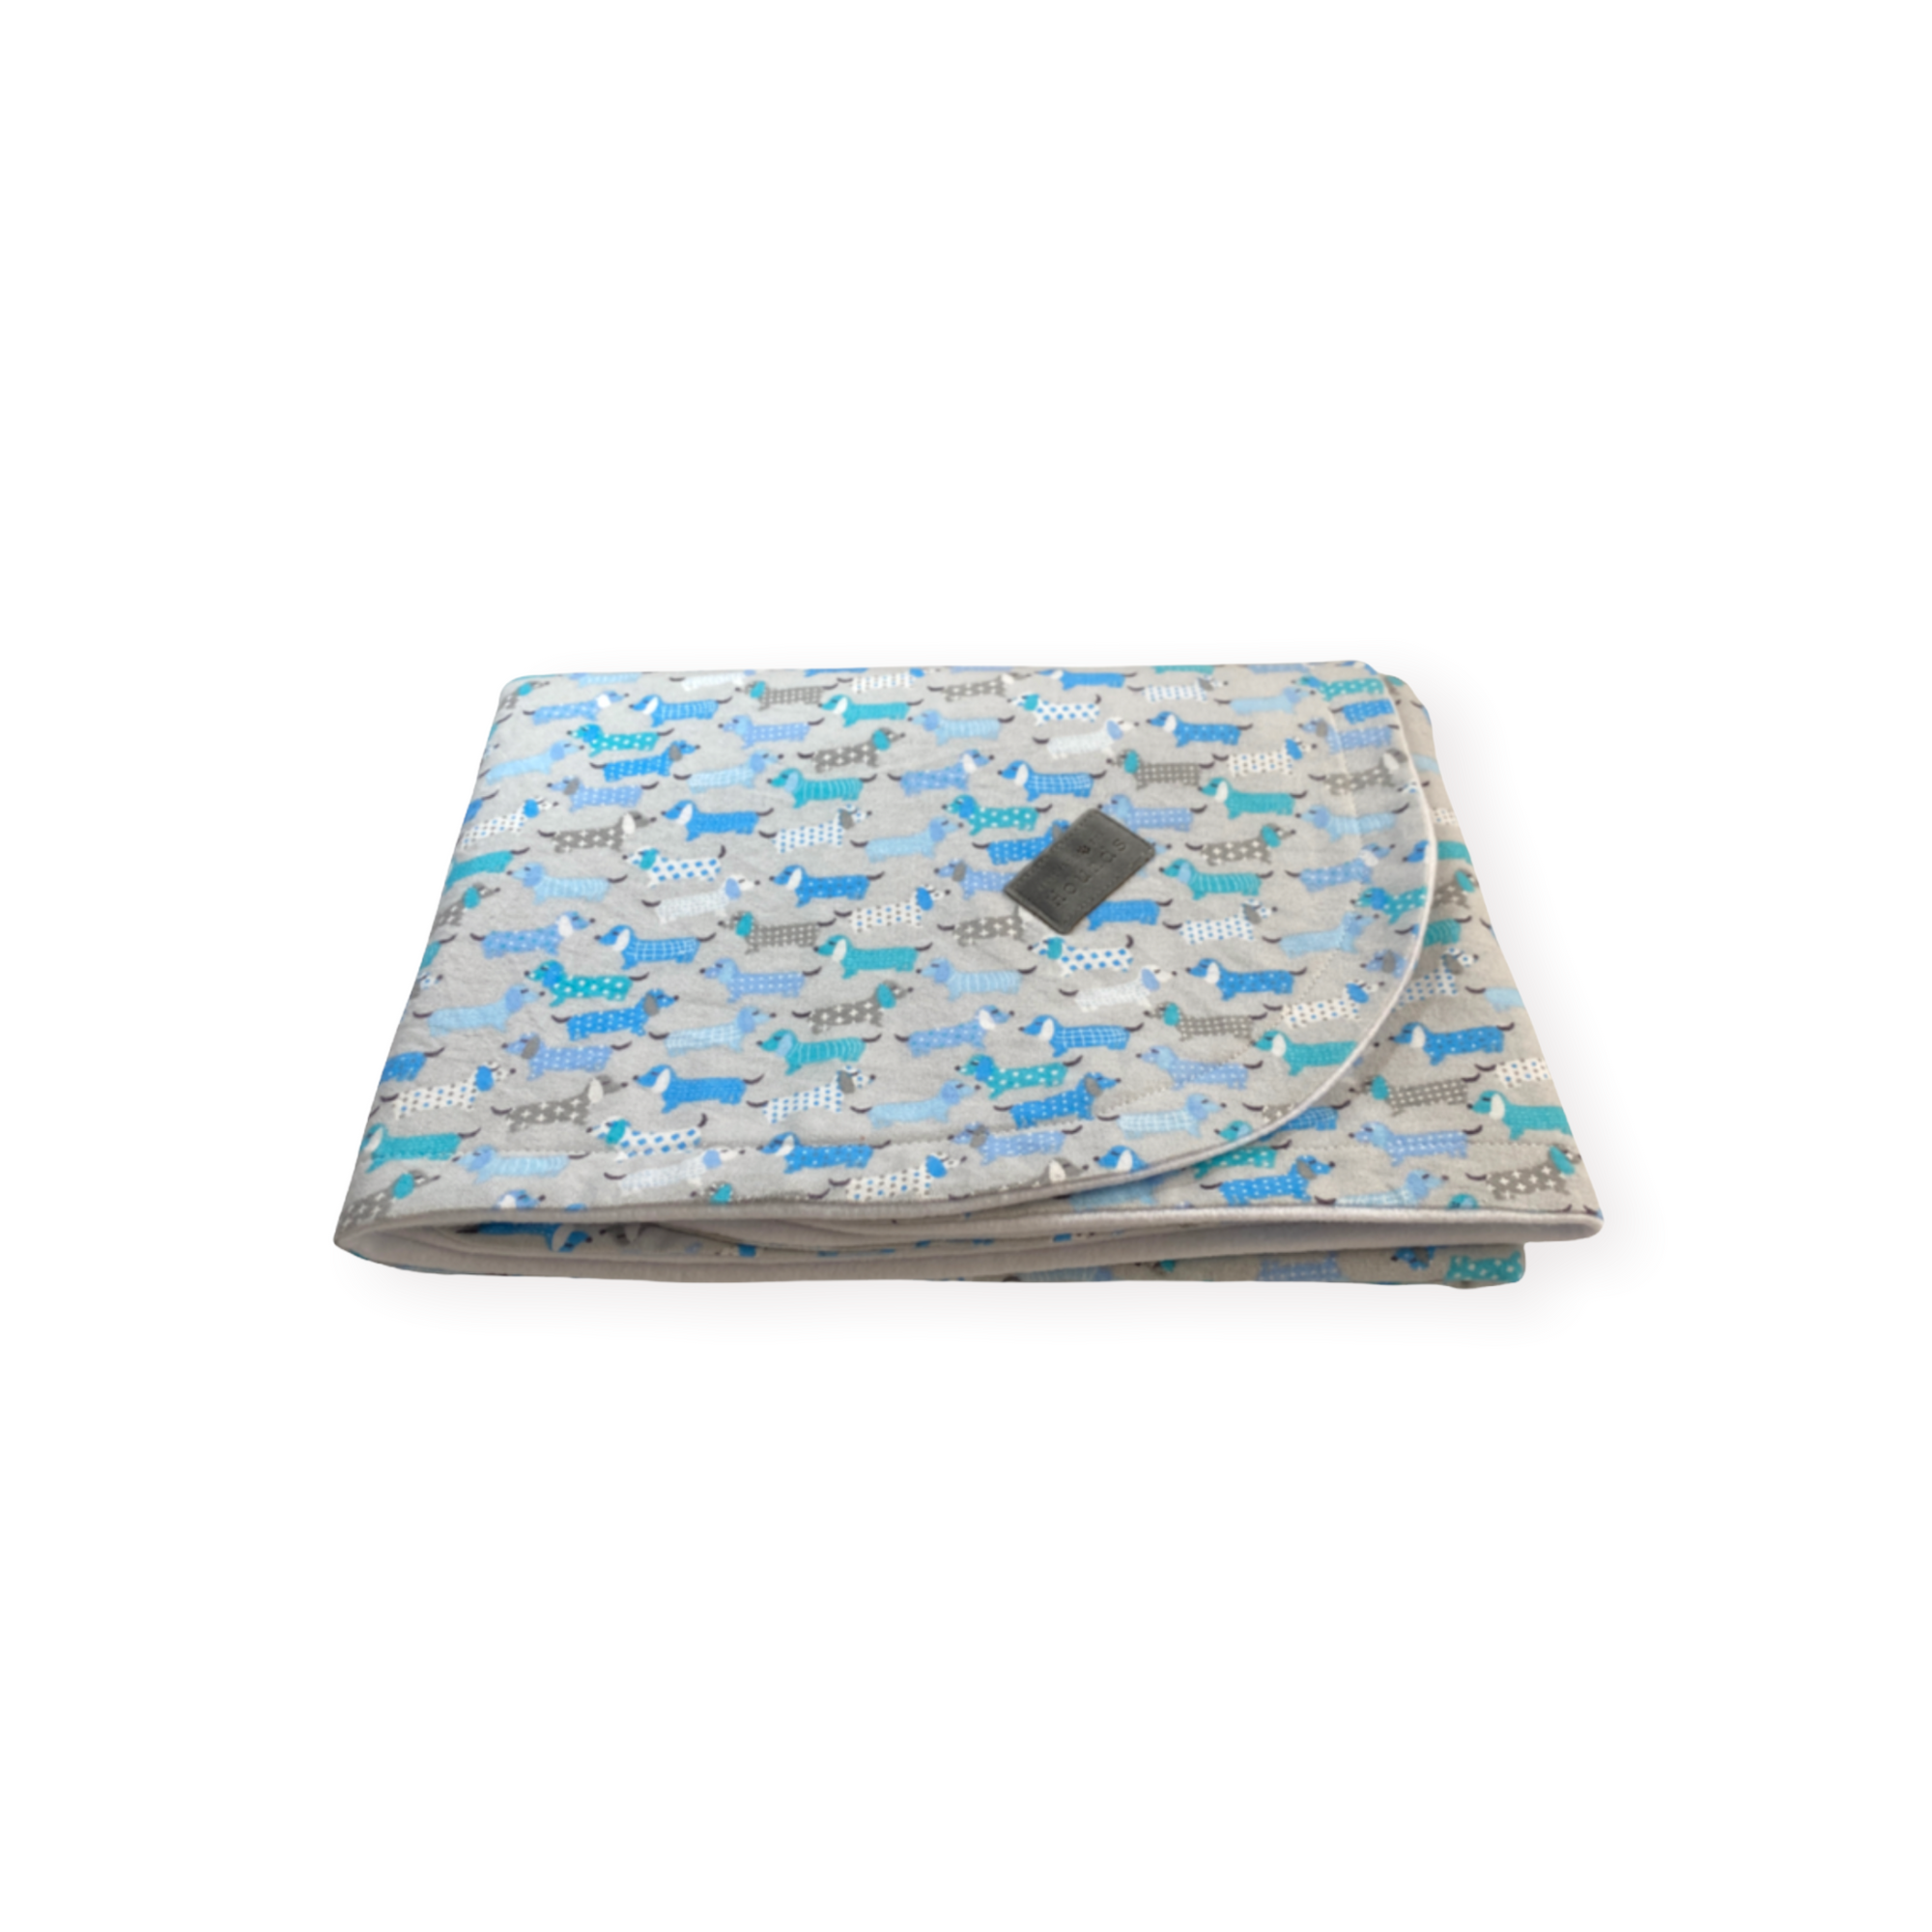 The Blue Dachshund Blanket